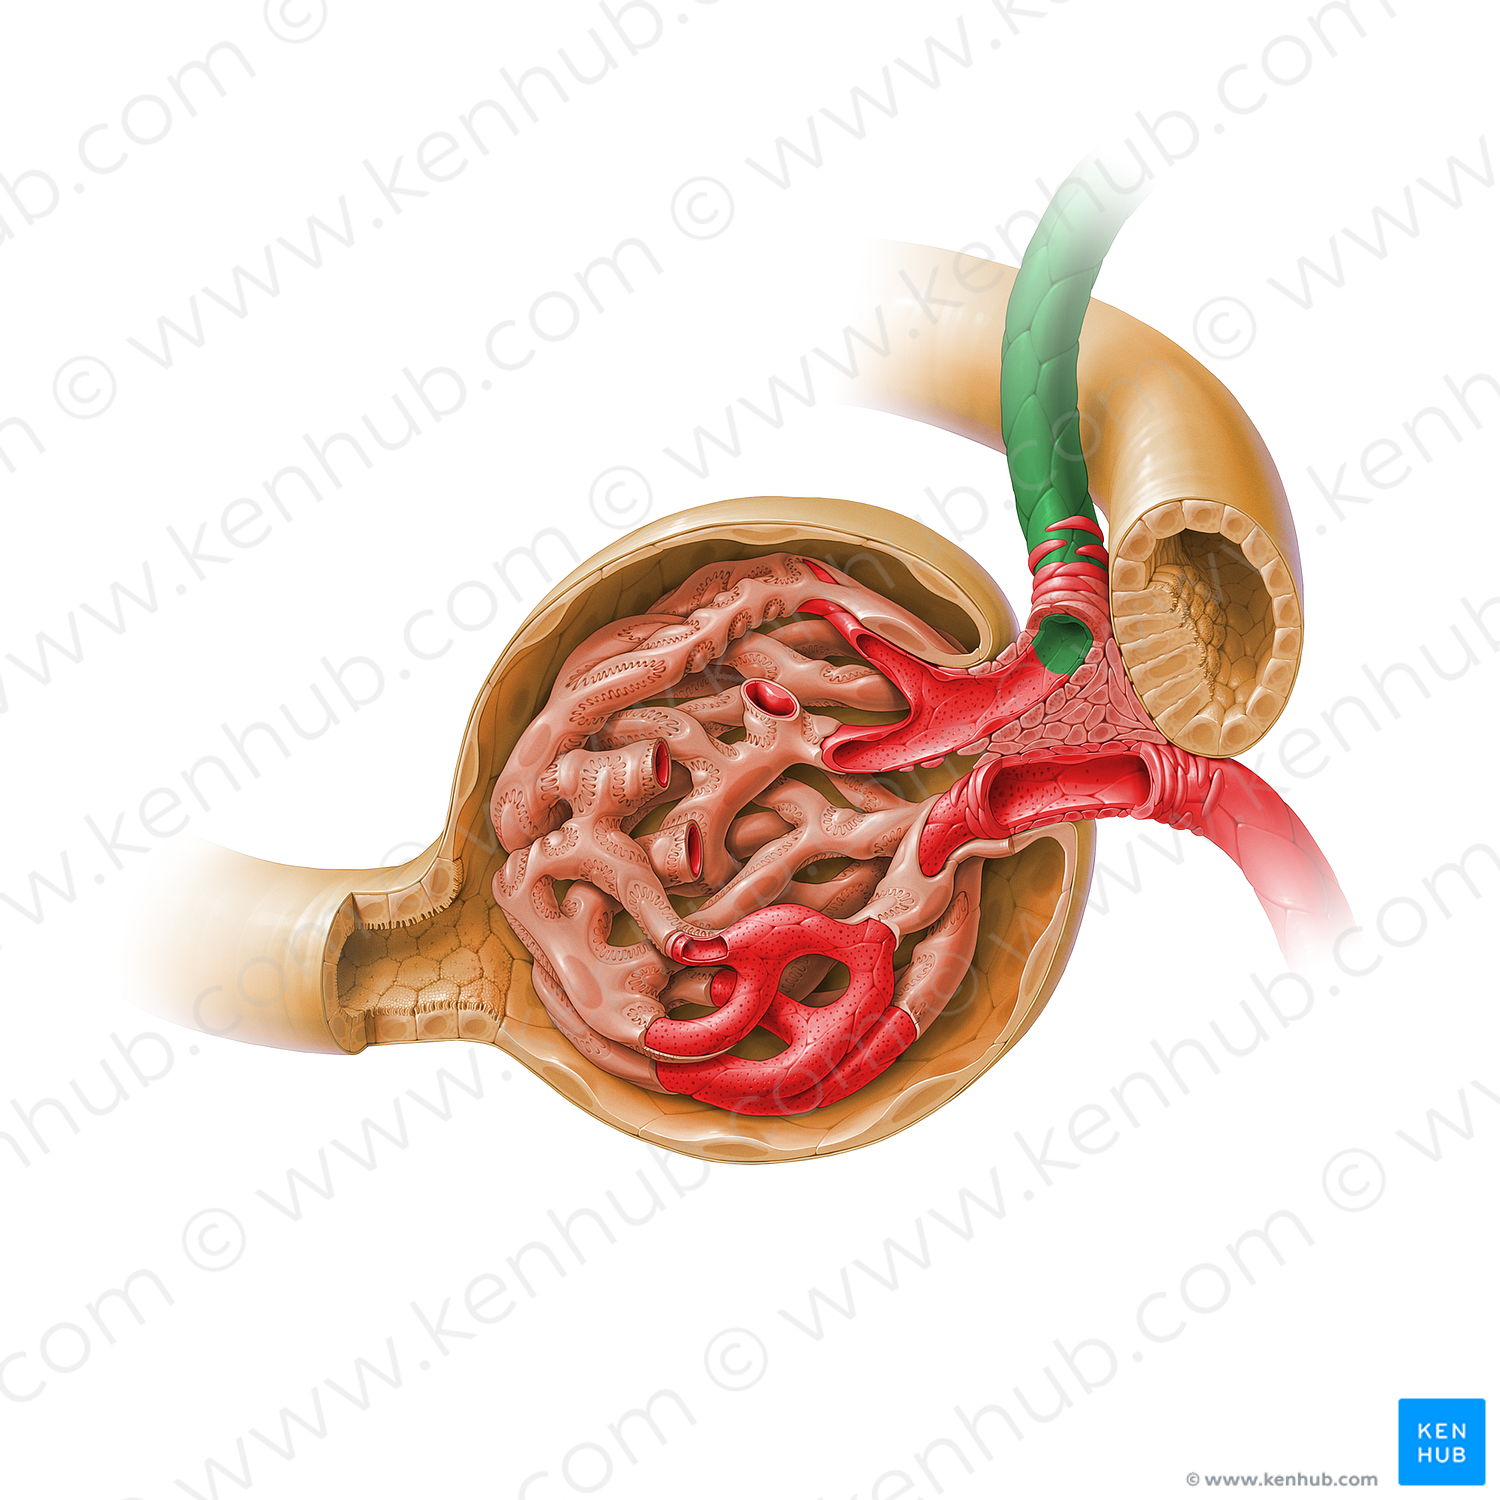 Afferent glomerular arteriole of renal corpuscle (#17915)